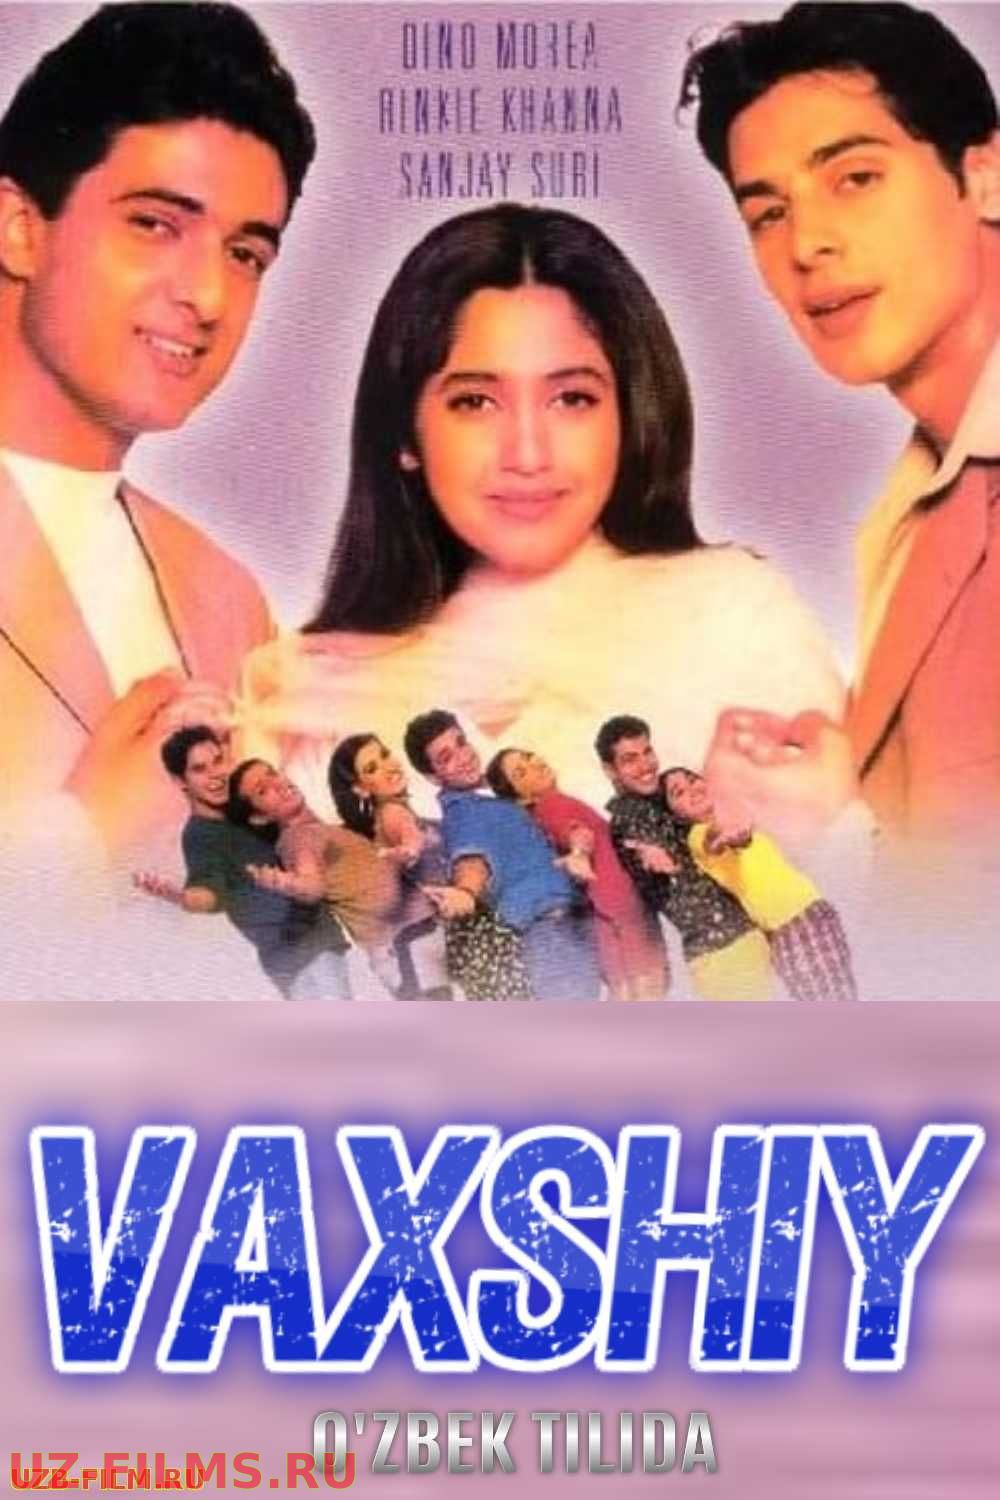 Vaxshiy Hind kino Uzbek tilida 1999